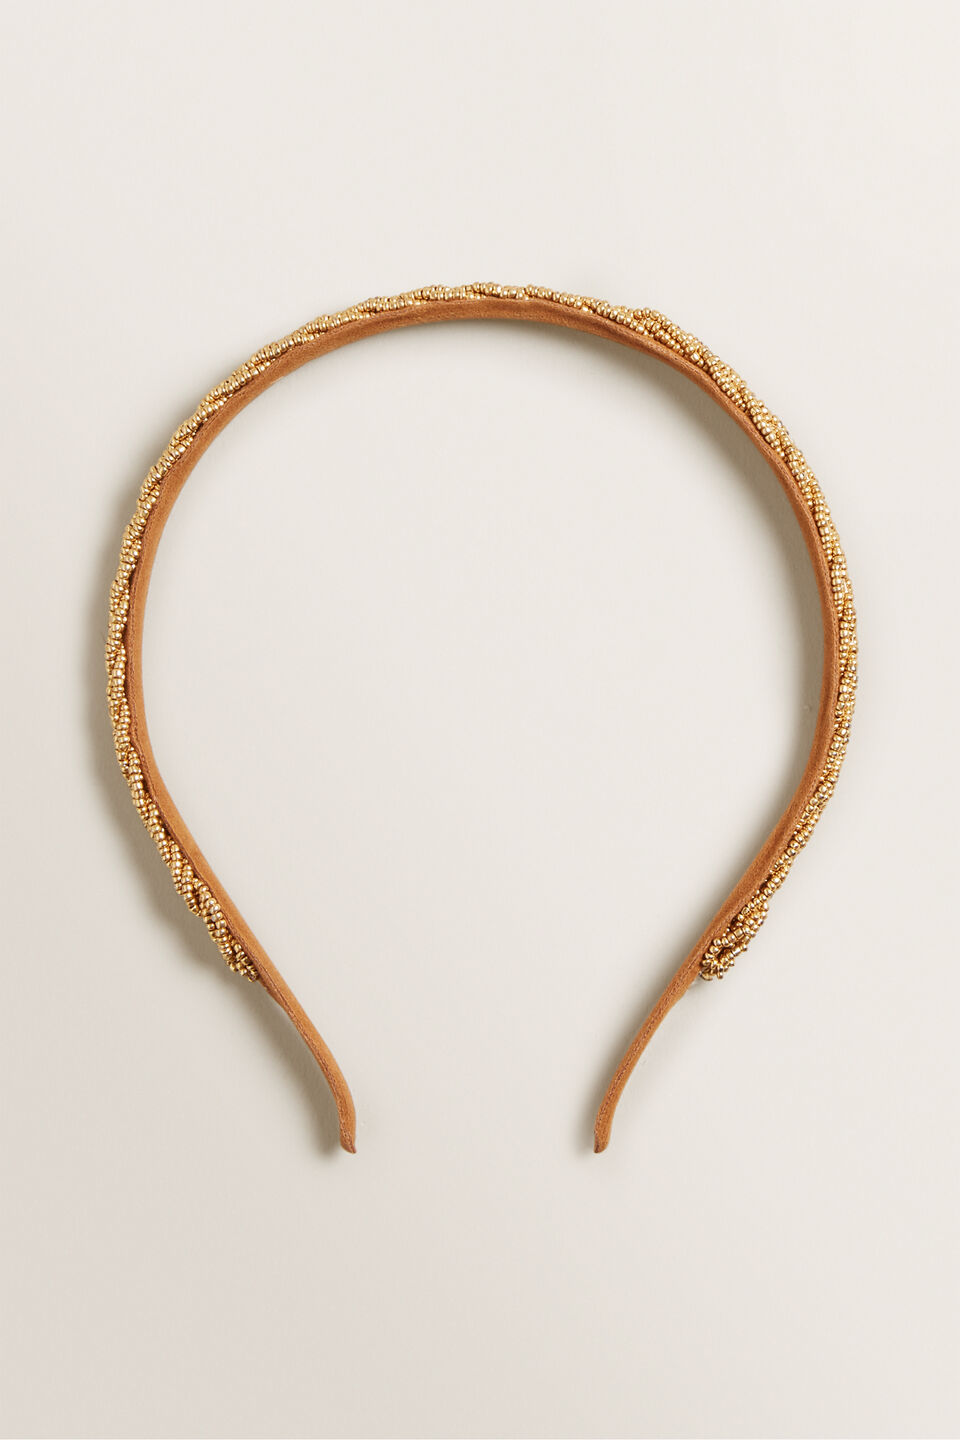 Bead Headband  9